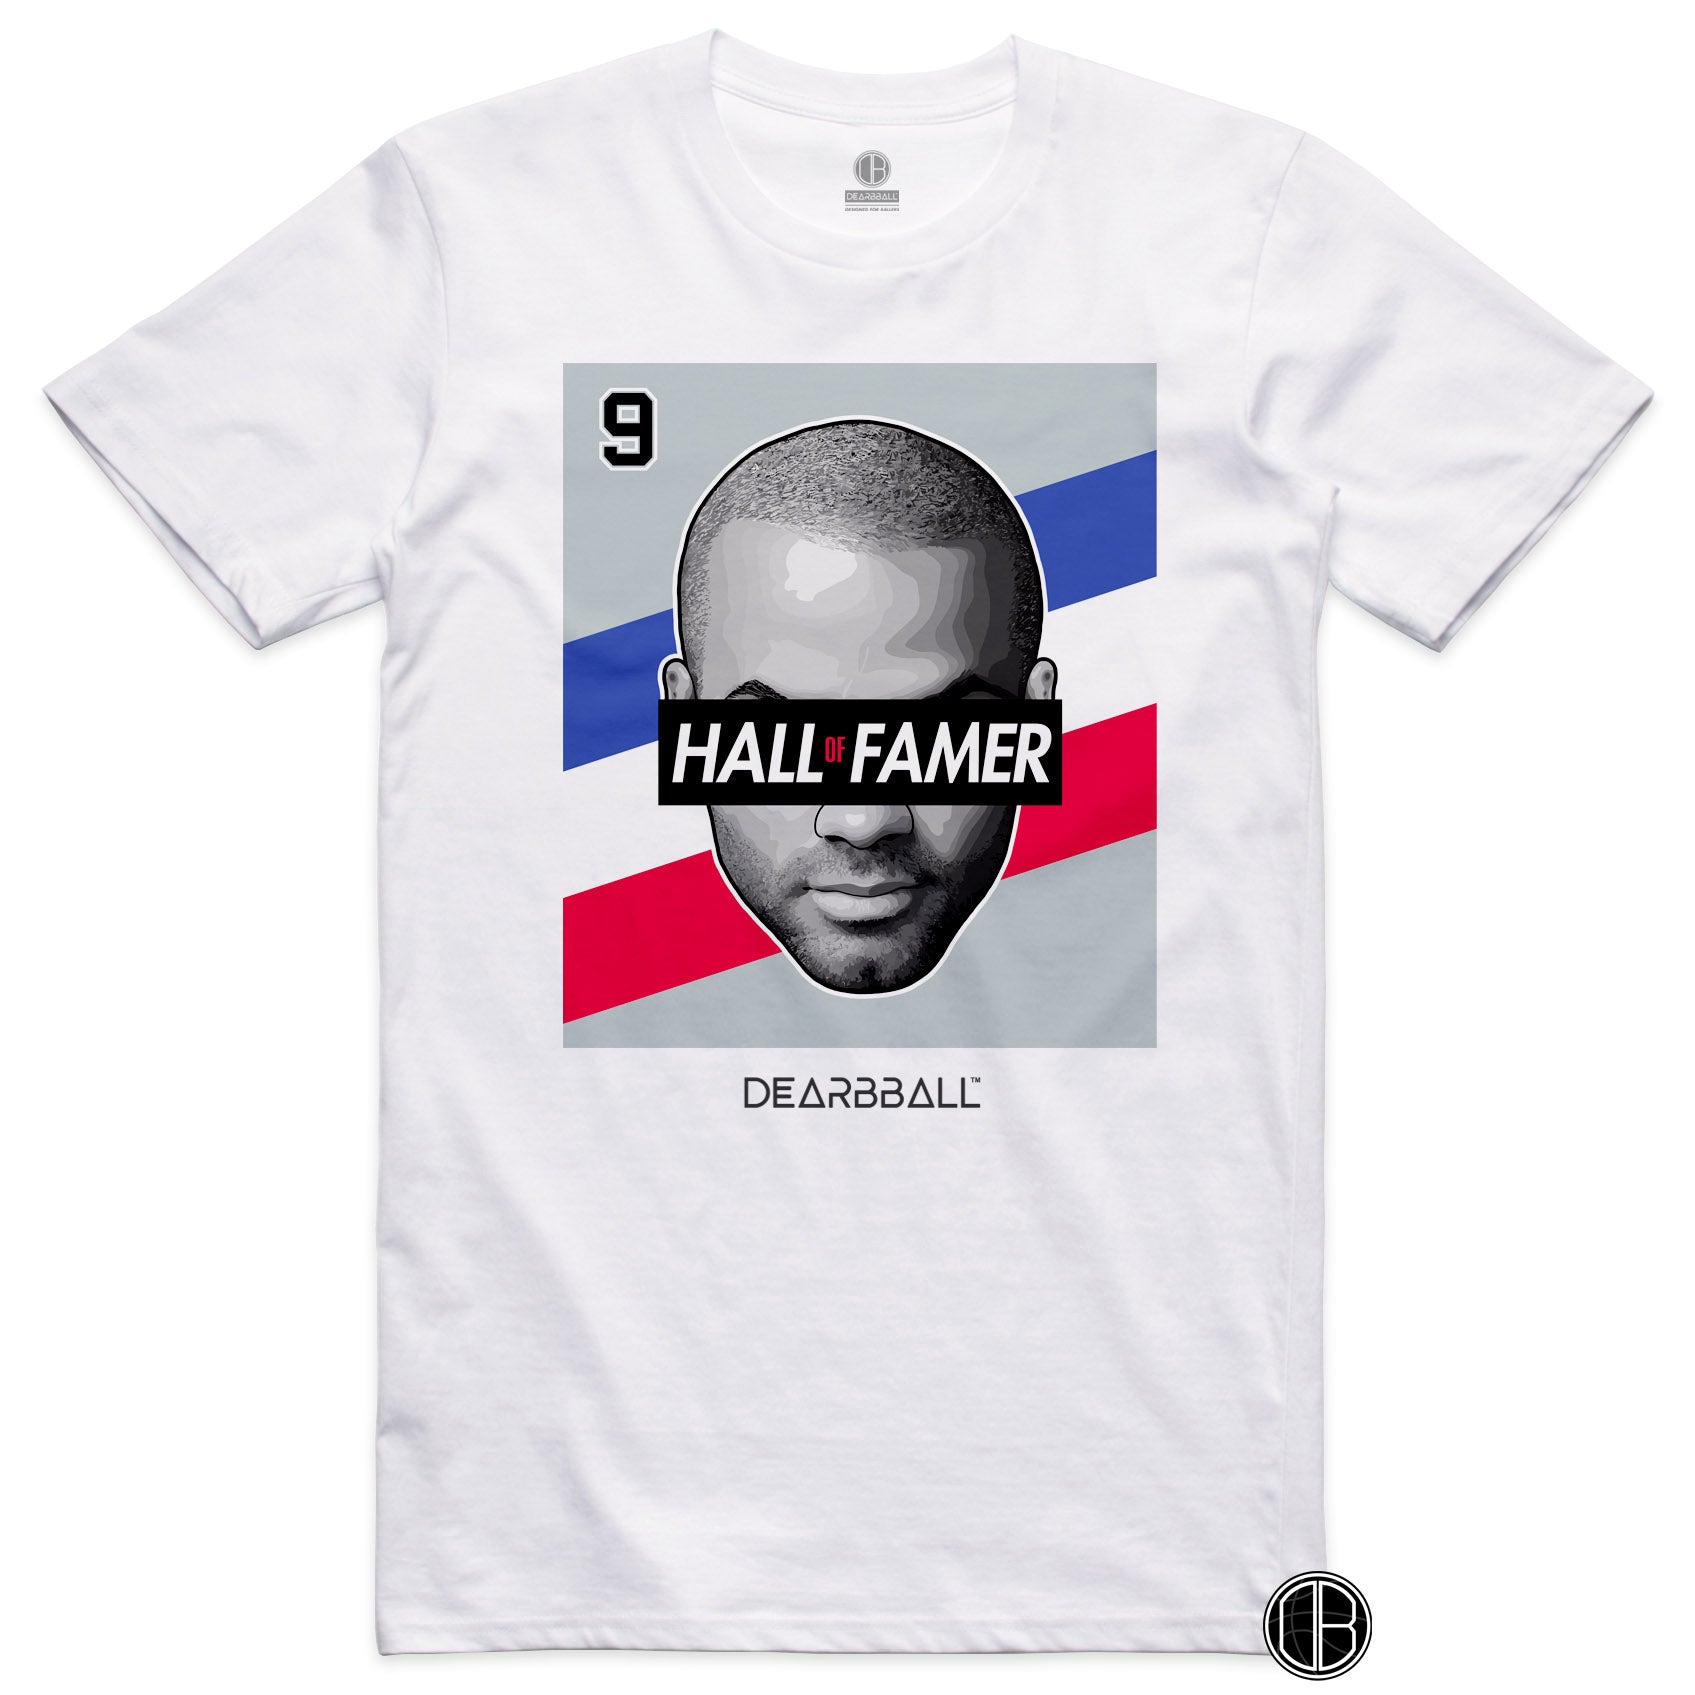 Camiseta DearBBall - HALL of FAMER 9 Francia